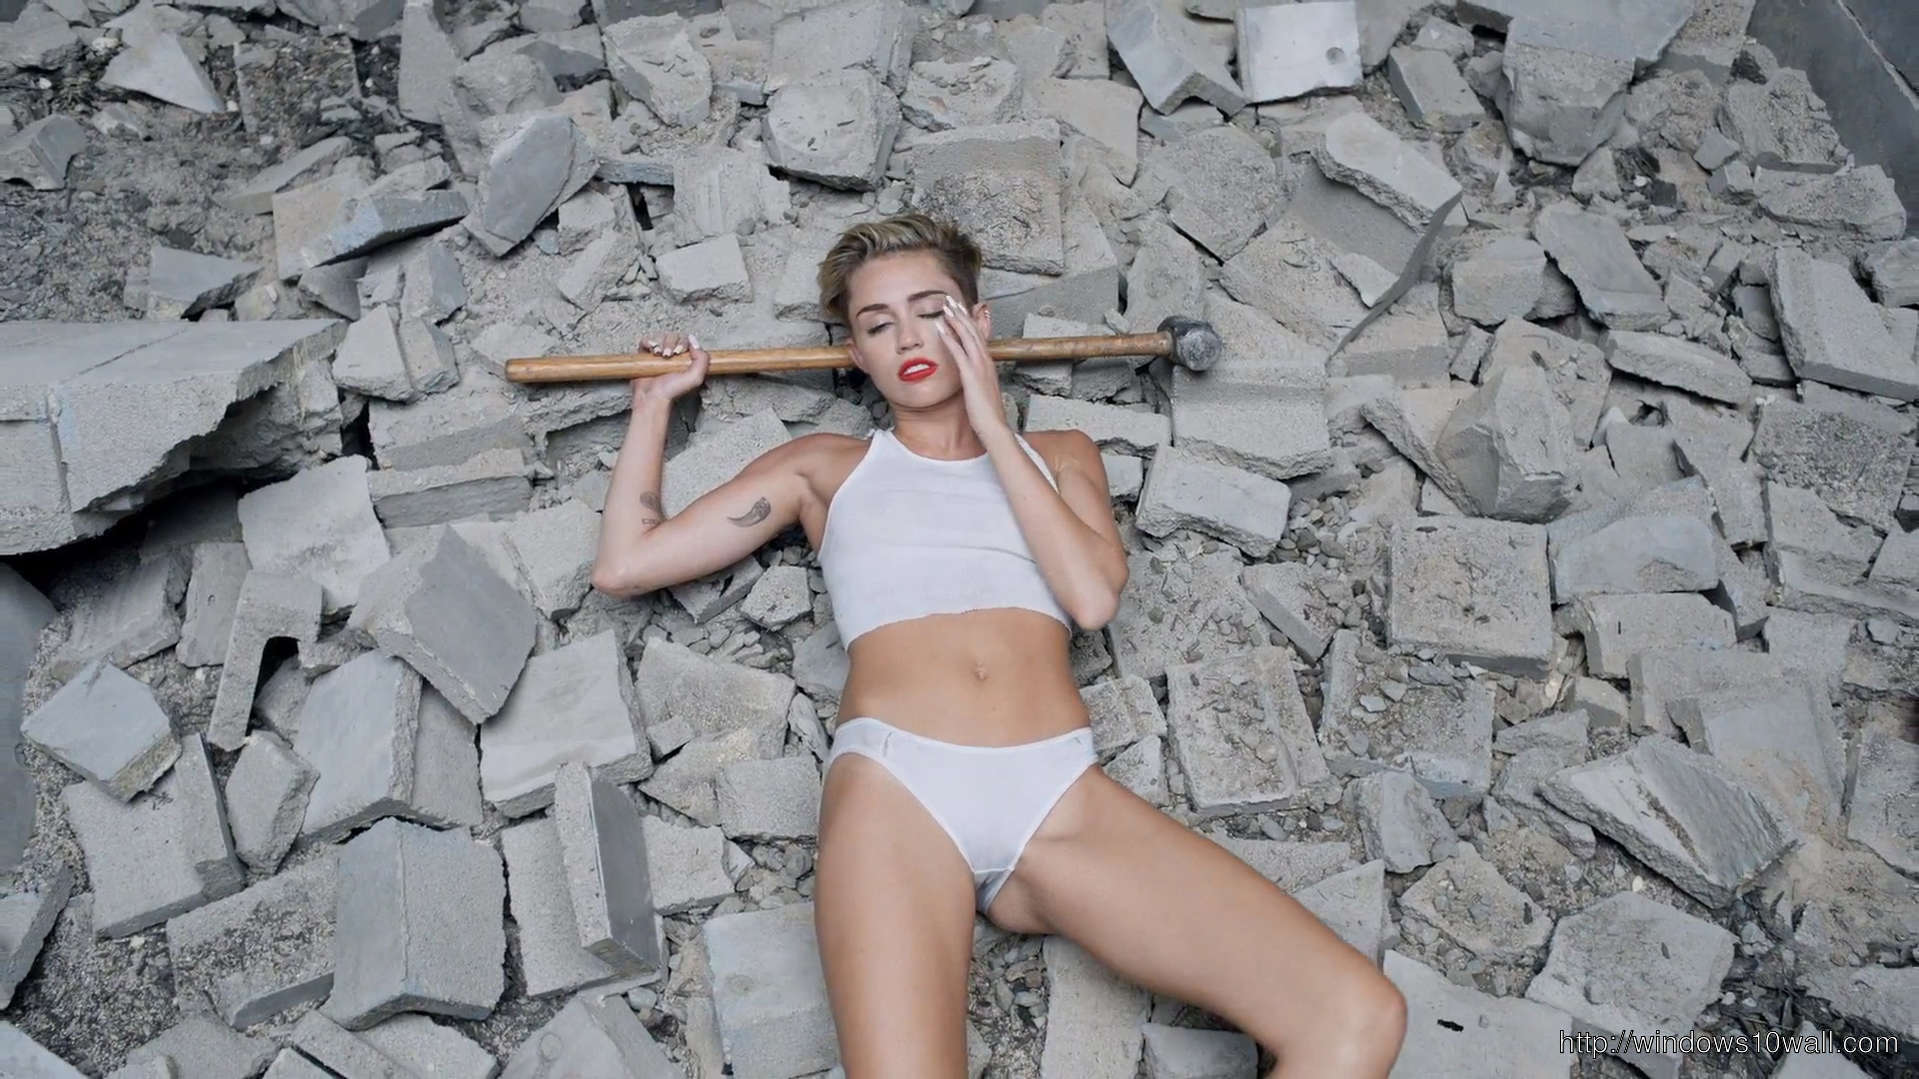 Miley Cyrus Wrecking Ball Tumblr Wallpaper